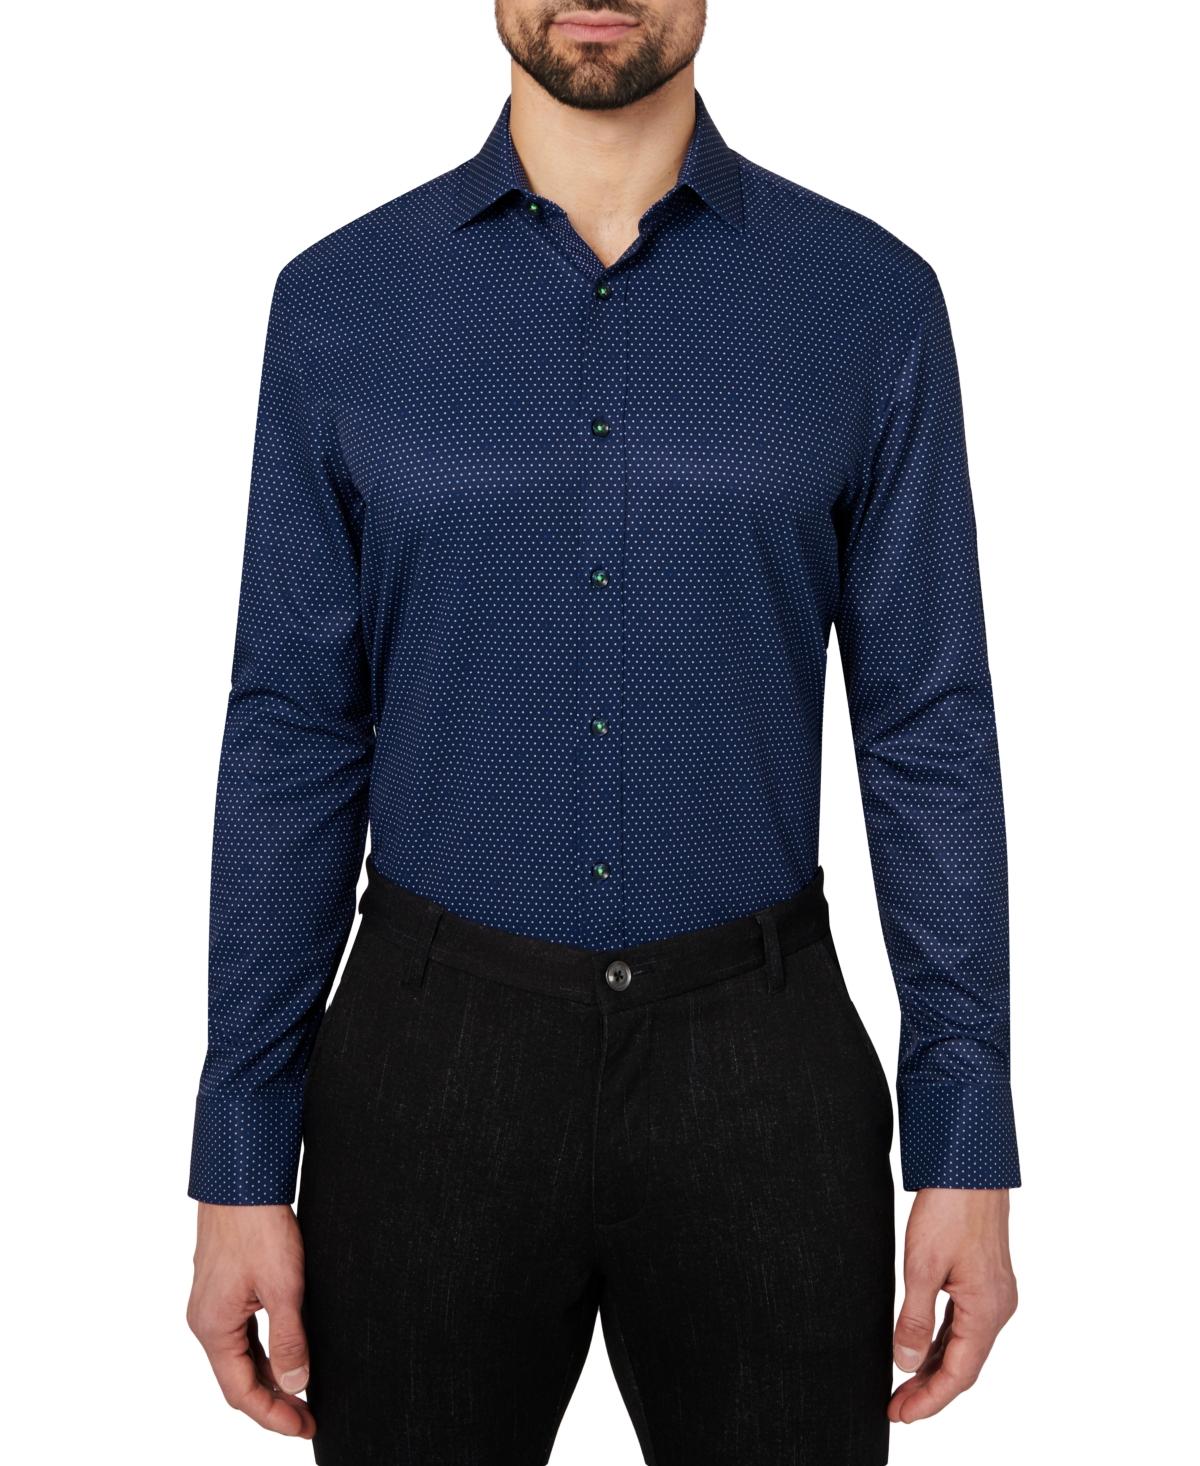 Men's Slim Fit Non-Iron Dot Print Performance Dress Shirt - Navy